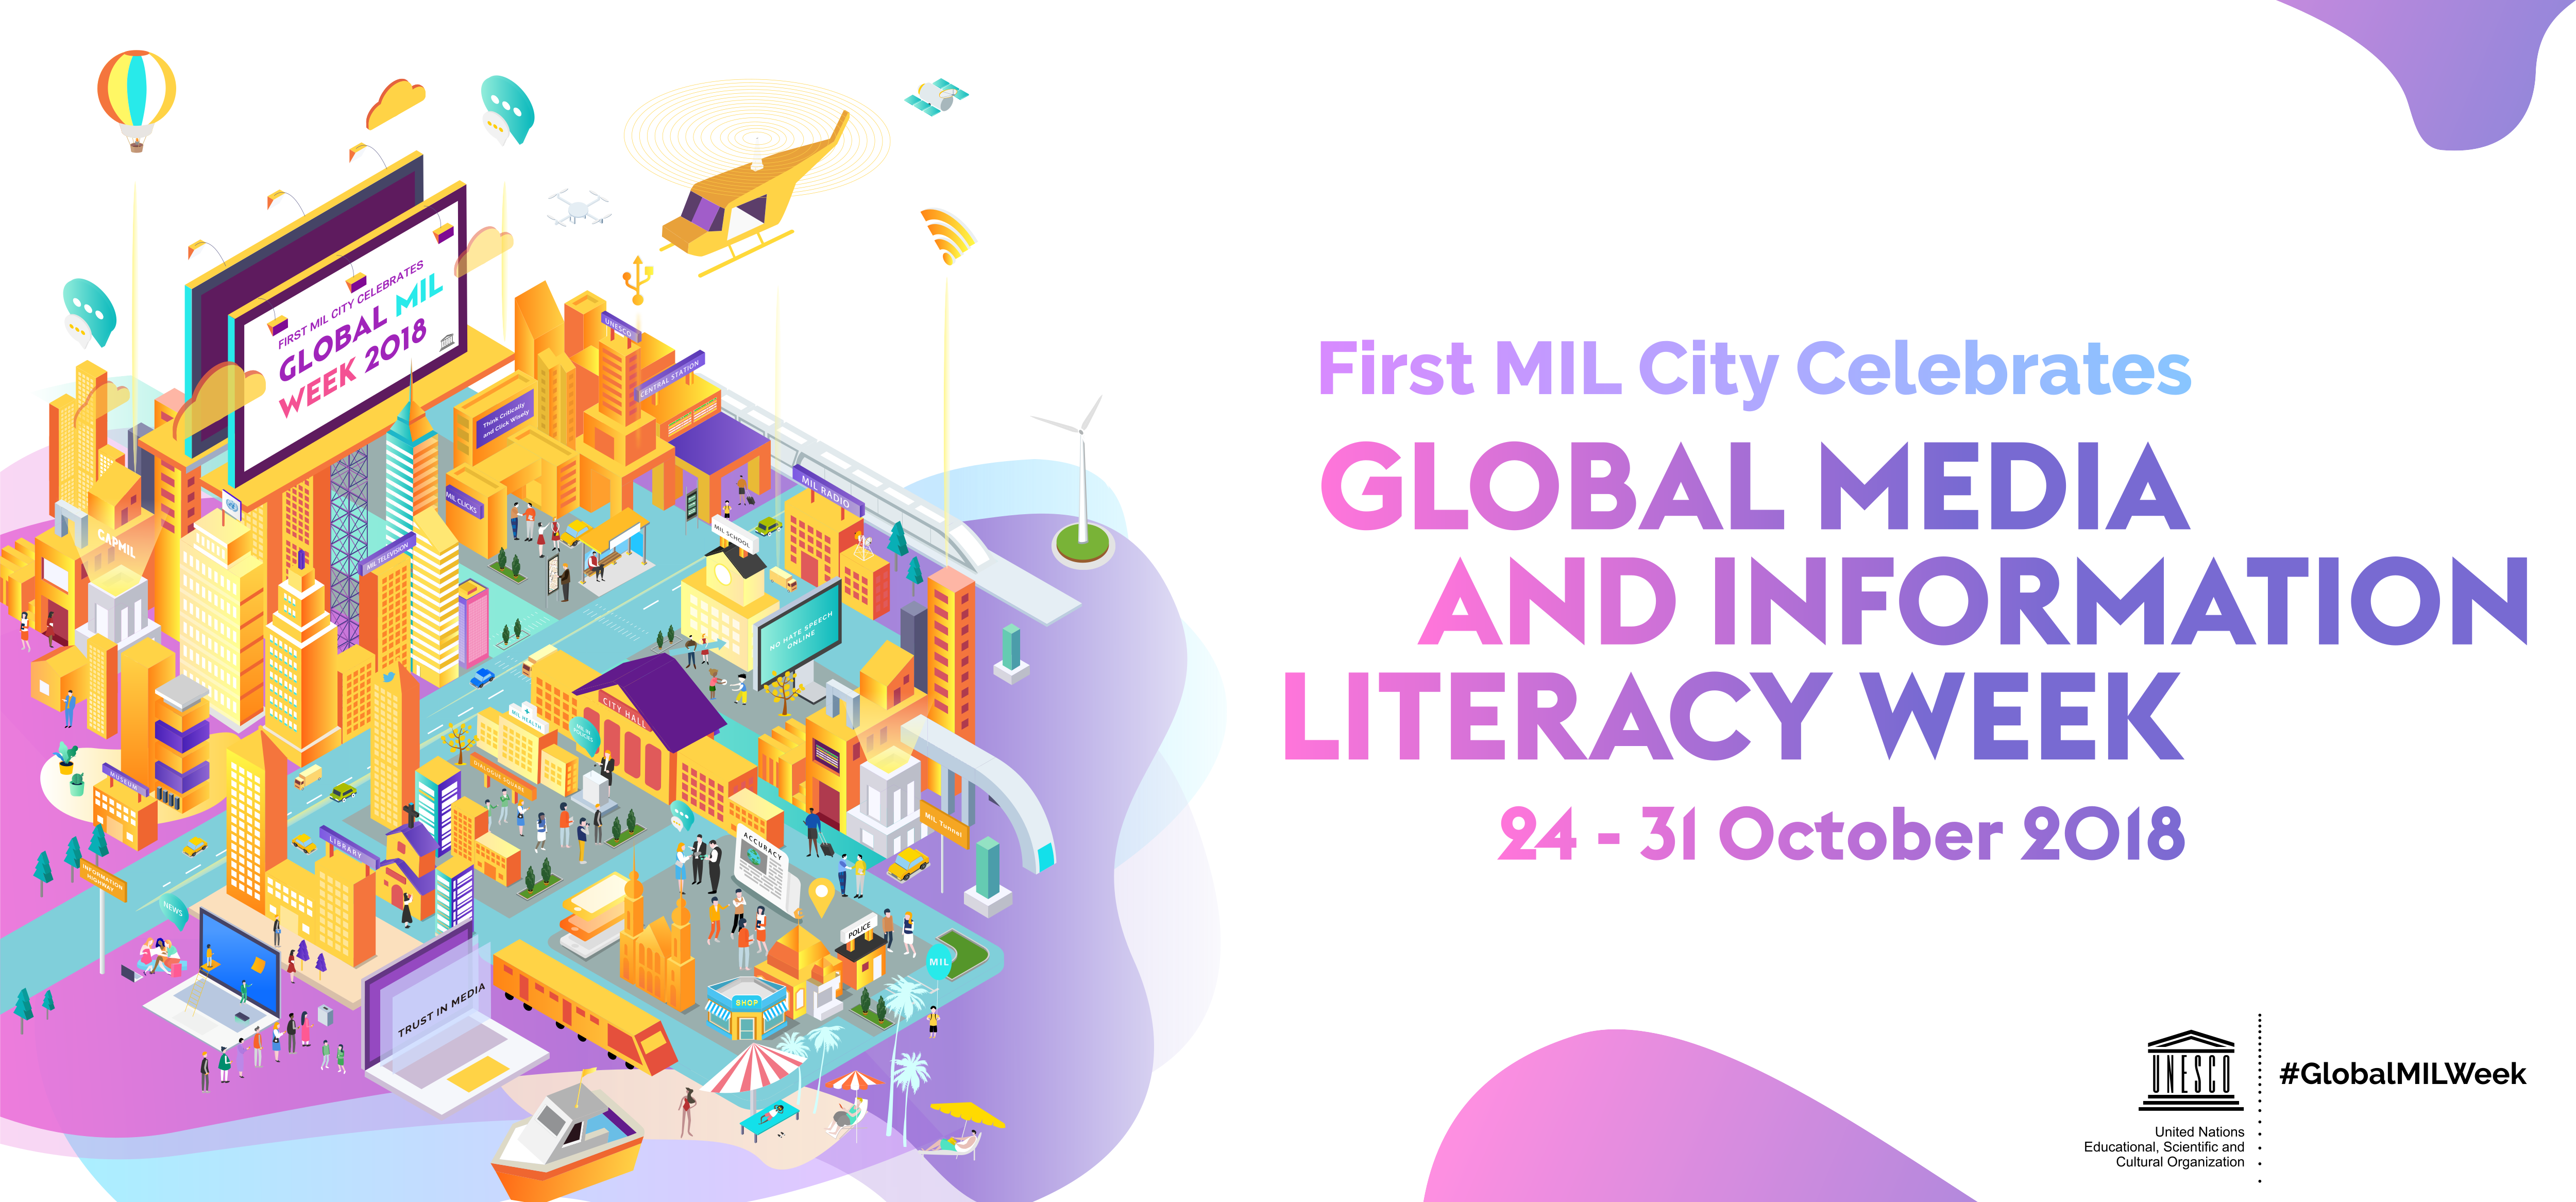 global media and information literacy week 2018 logo